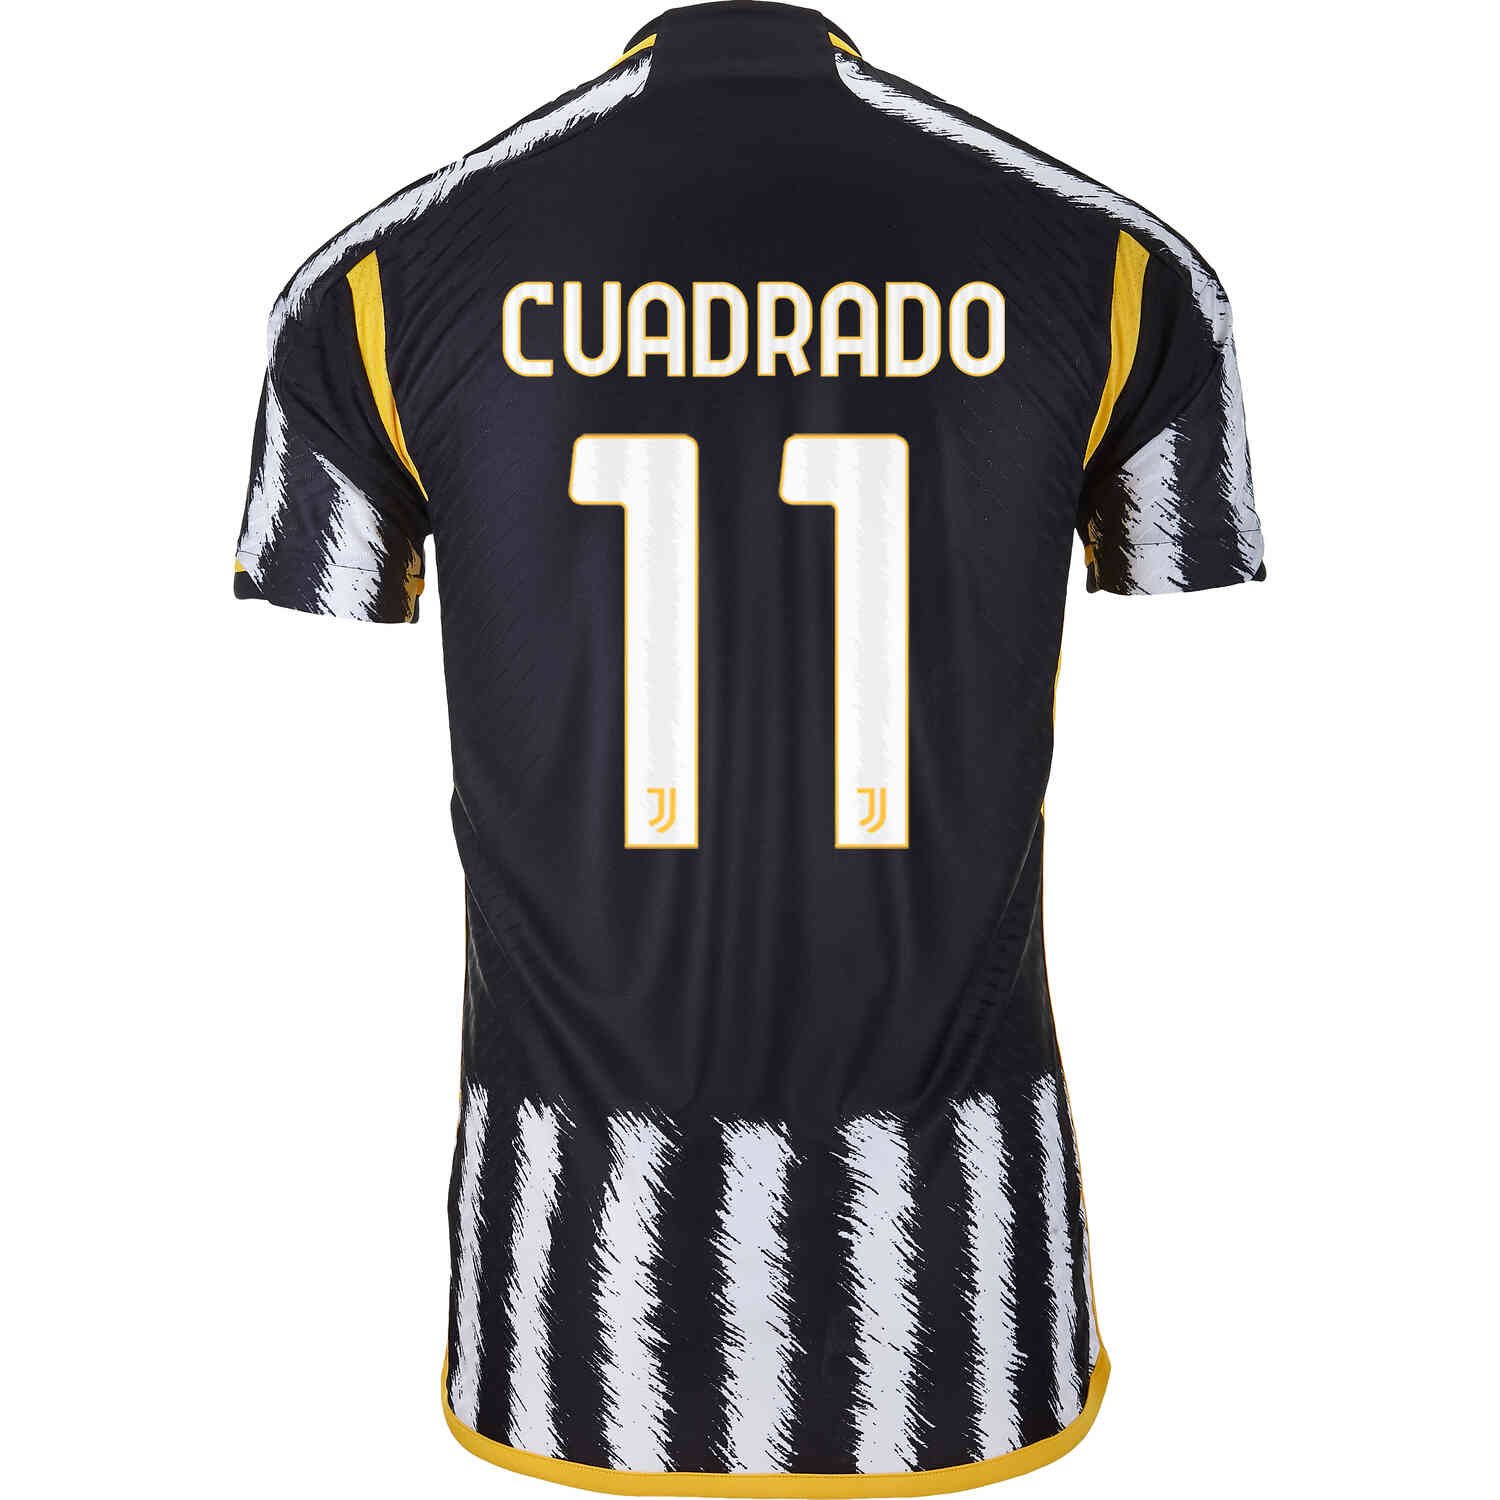 Cuadrado hints at Cristiano Ronaldo's Juventus shirt number